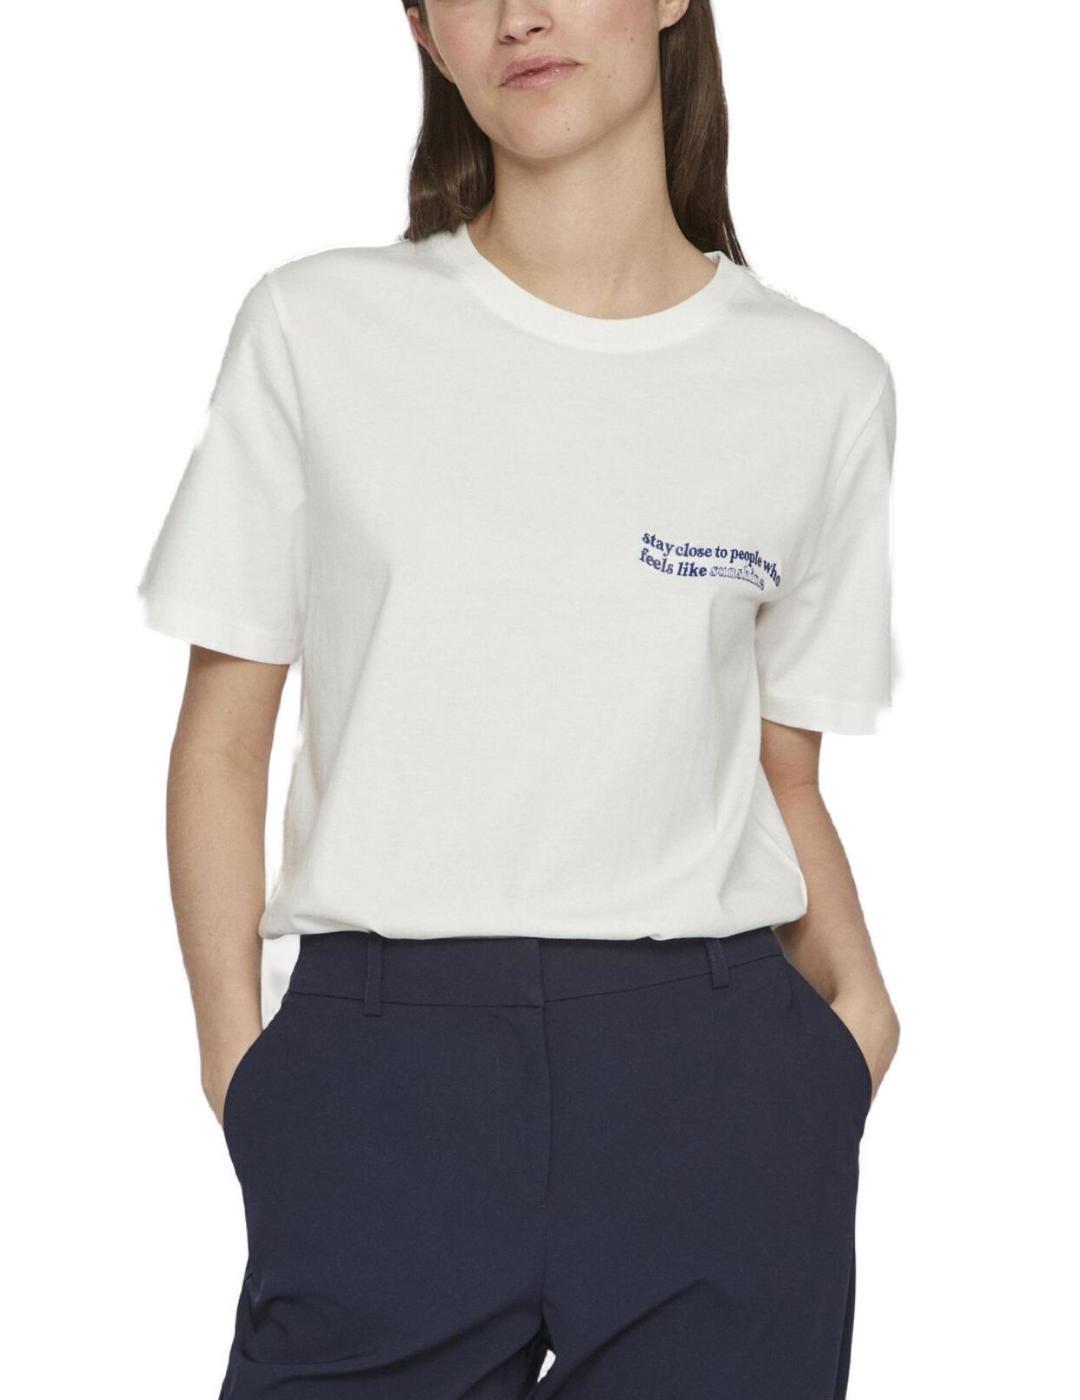 Camiseta Vila Sybil blanco true blue manga corta para mujer